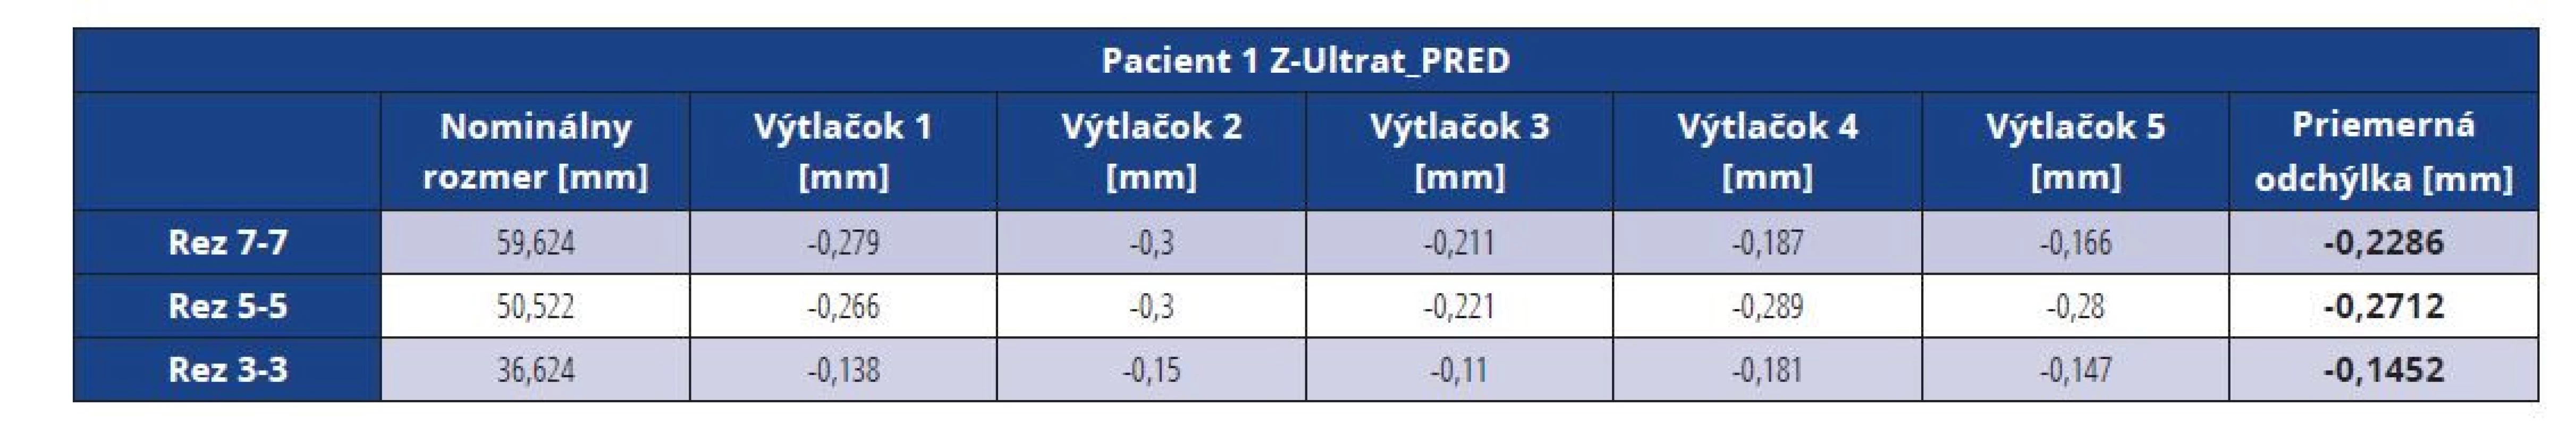 Rozmerové odchýlky master modelu pacienta 1 vytlačeného z materiálu Z-Ultrat pred vákuovaním<br>
Tab. 5 Dimensional deviations of the Z-Ultrat master model before vacuuming (patient 1)